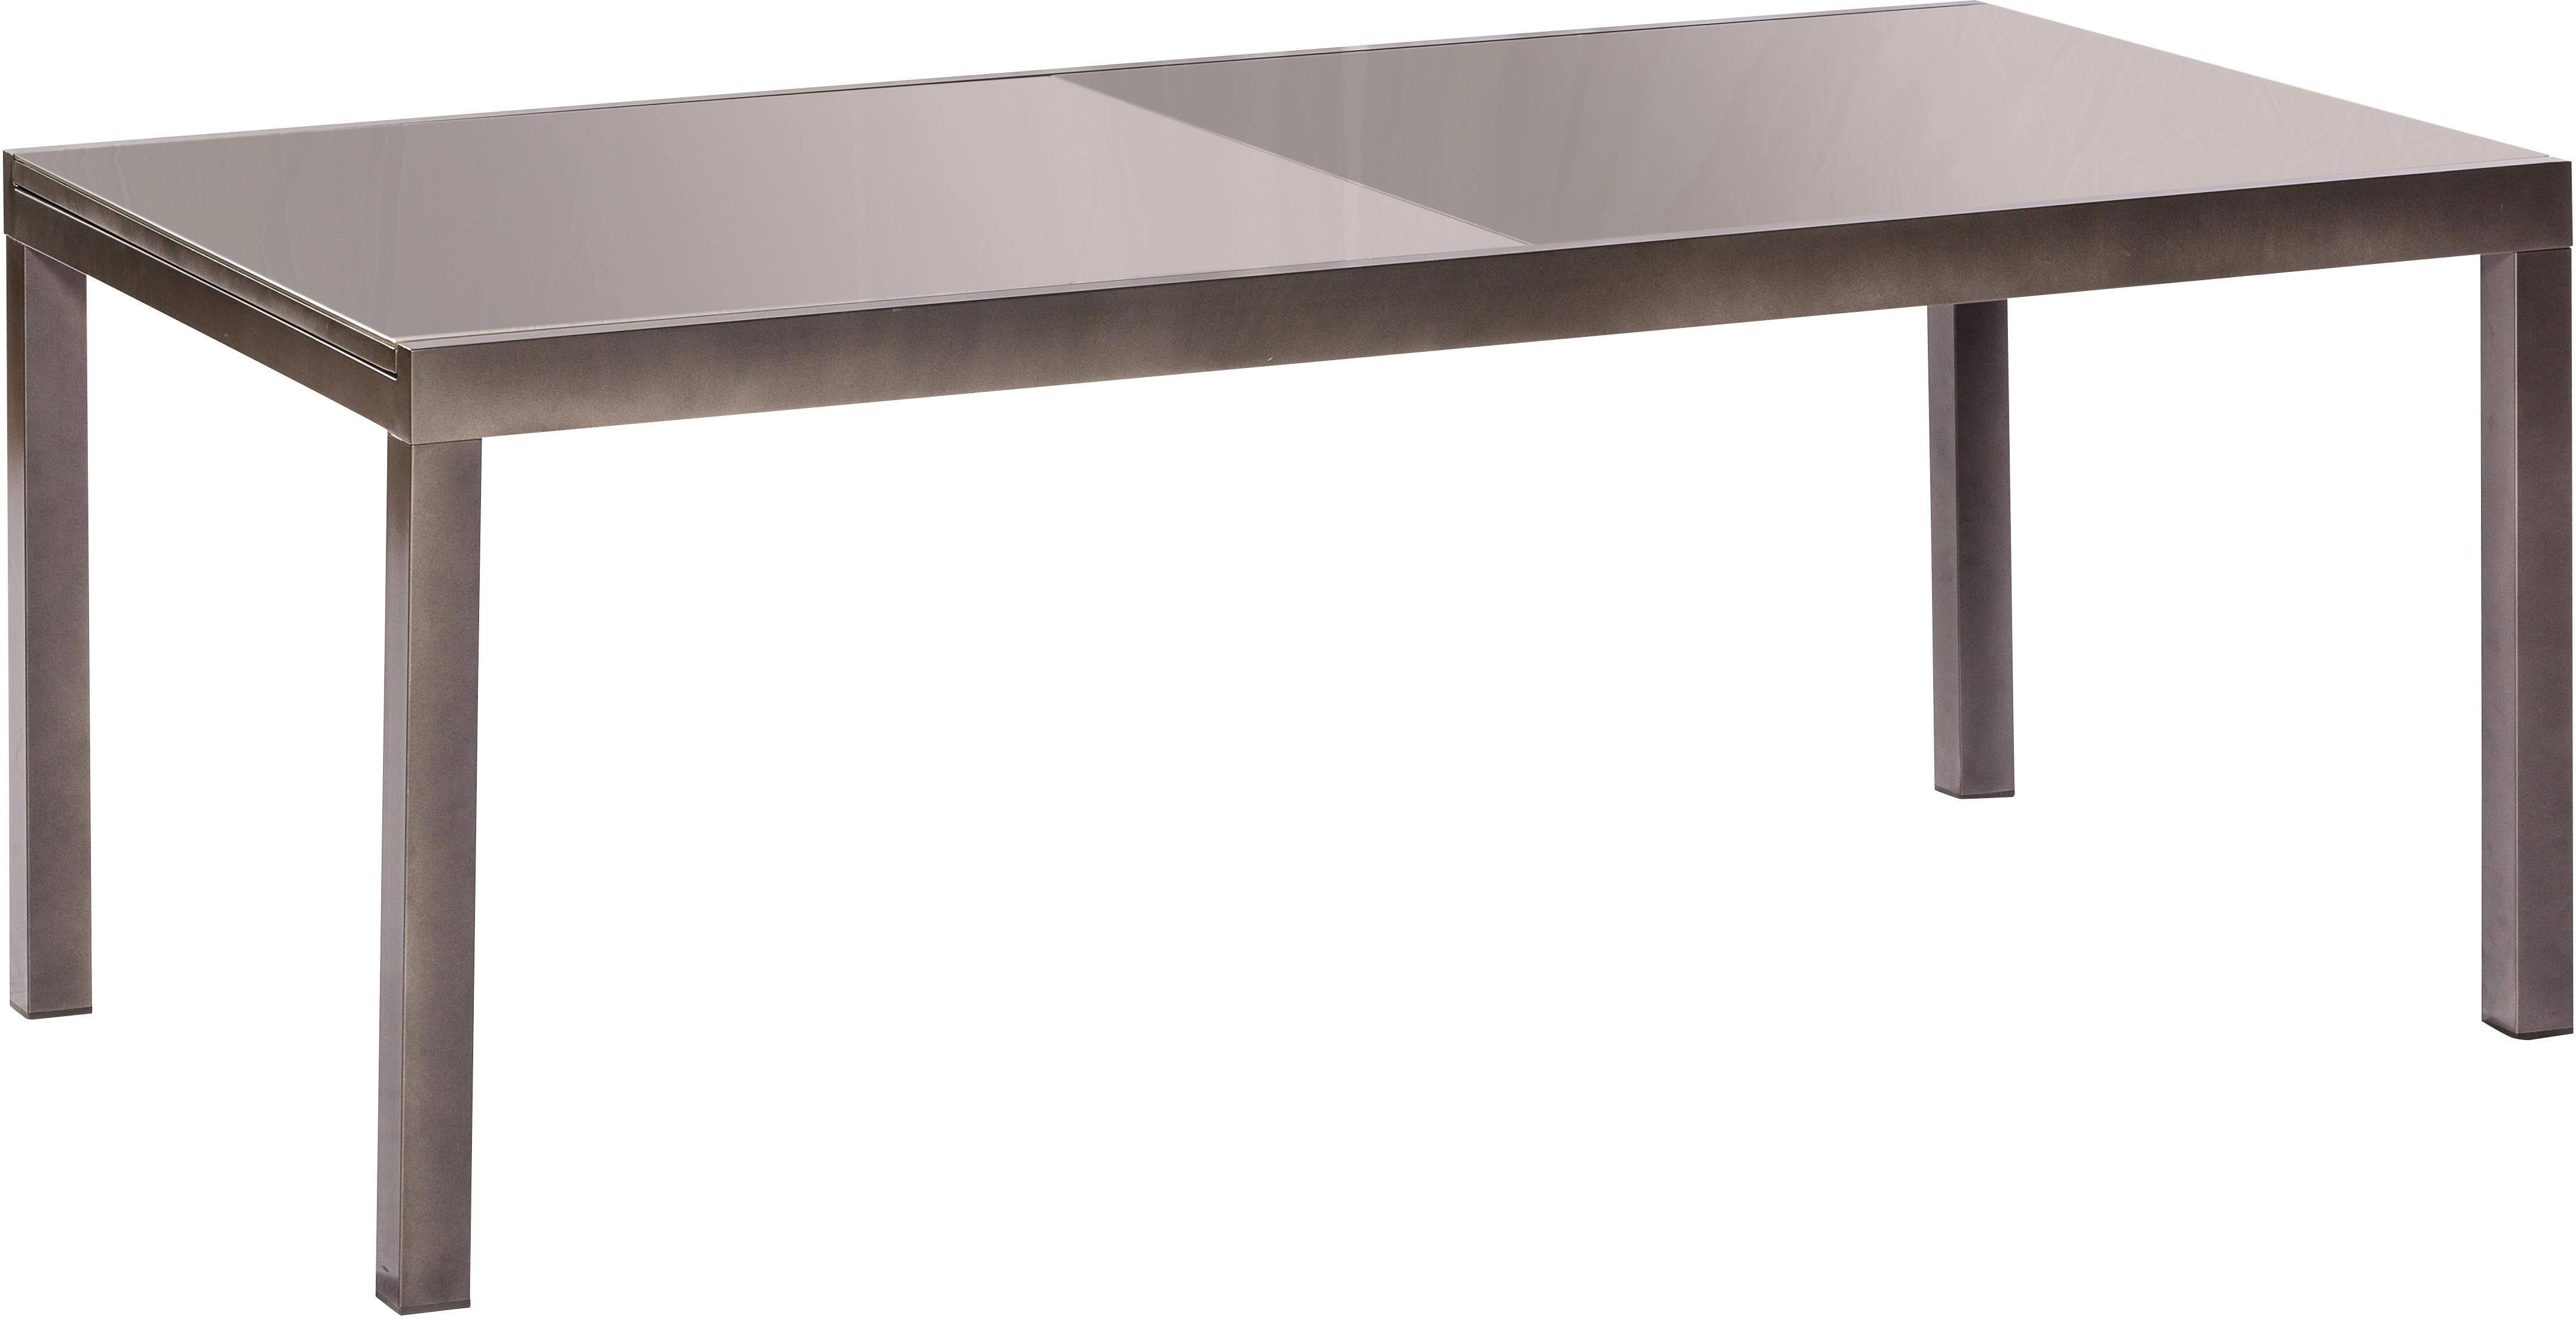 Merxx Gartentisch cm cm Aluminium kaufen Ausziehbar Rechteckig 110 200/300 Grau bei Semi OBI x